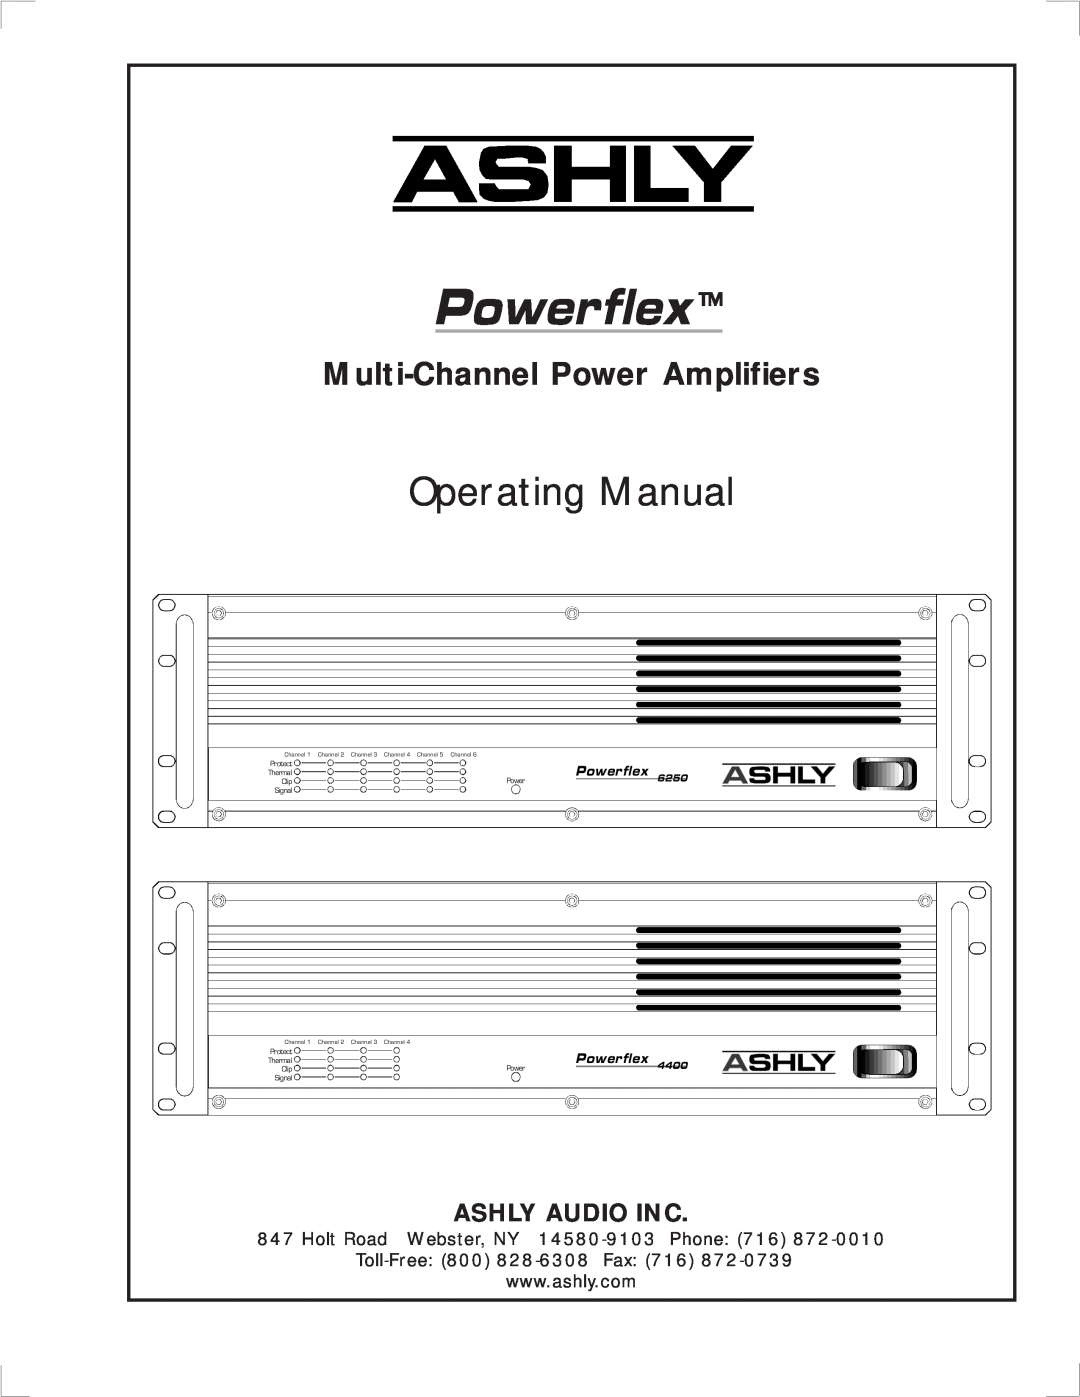 Ashly TRA-4150 manual Multi-ChannelPower Amplifiers, Powerflex , Operating Manual, Ashly Audio Inc, Holt Road Webster, NY 